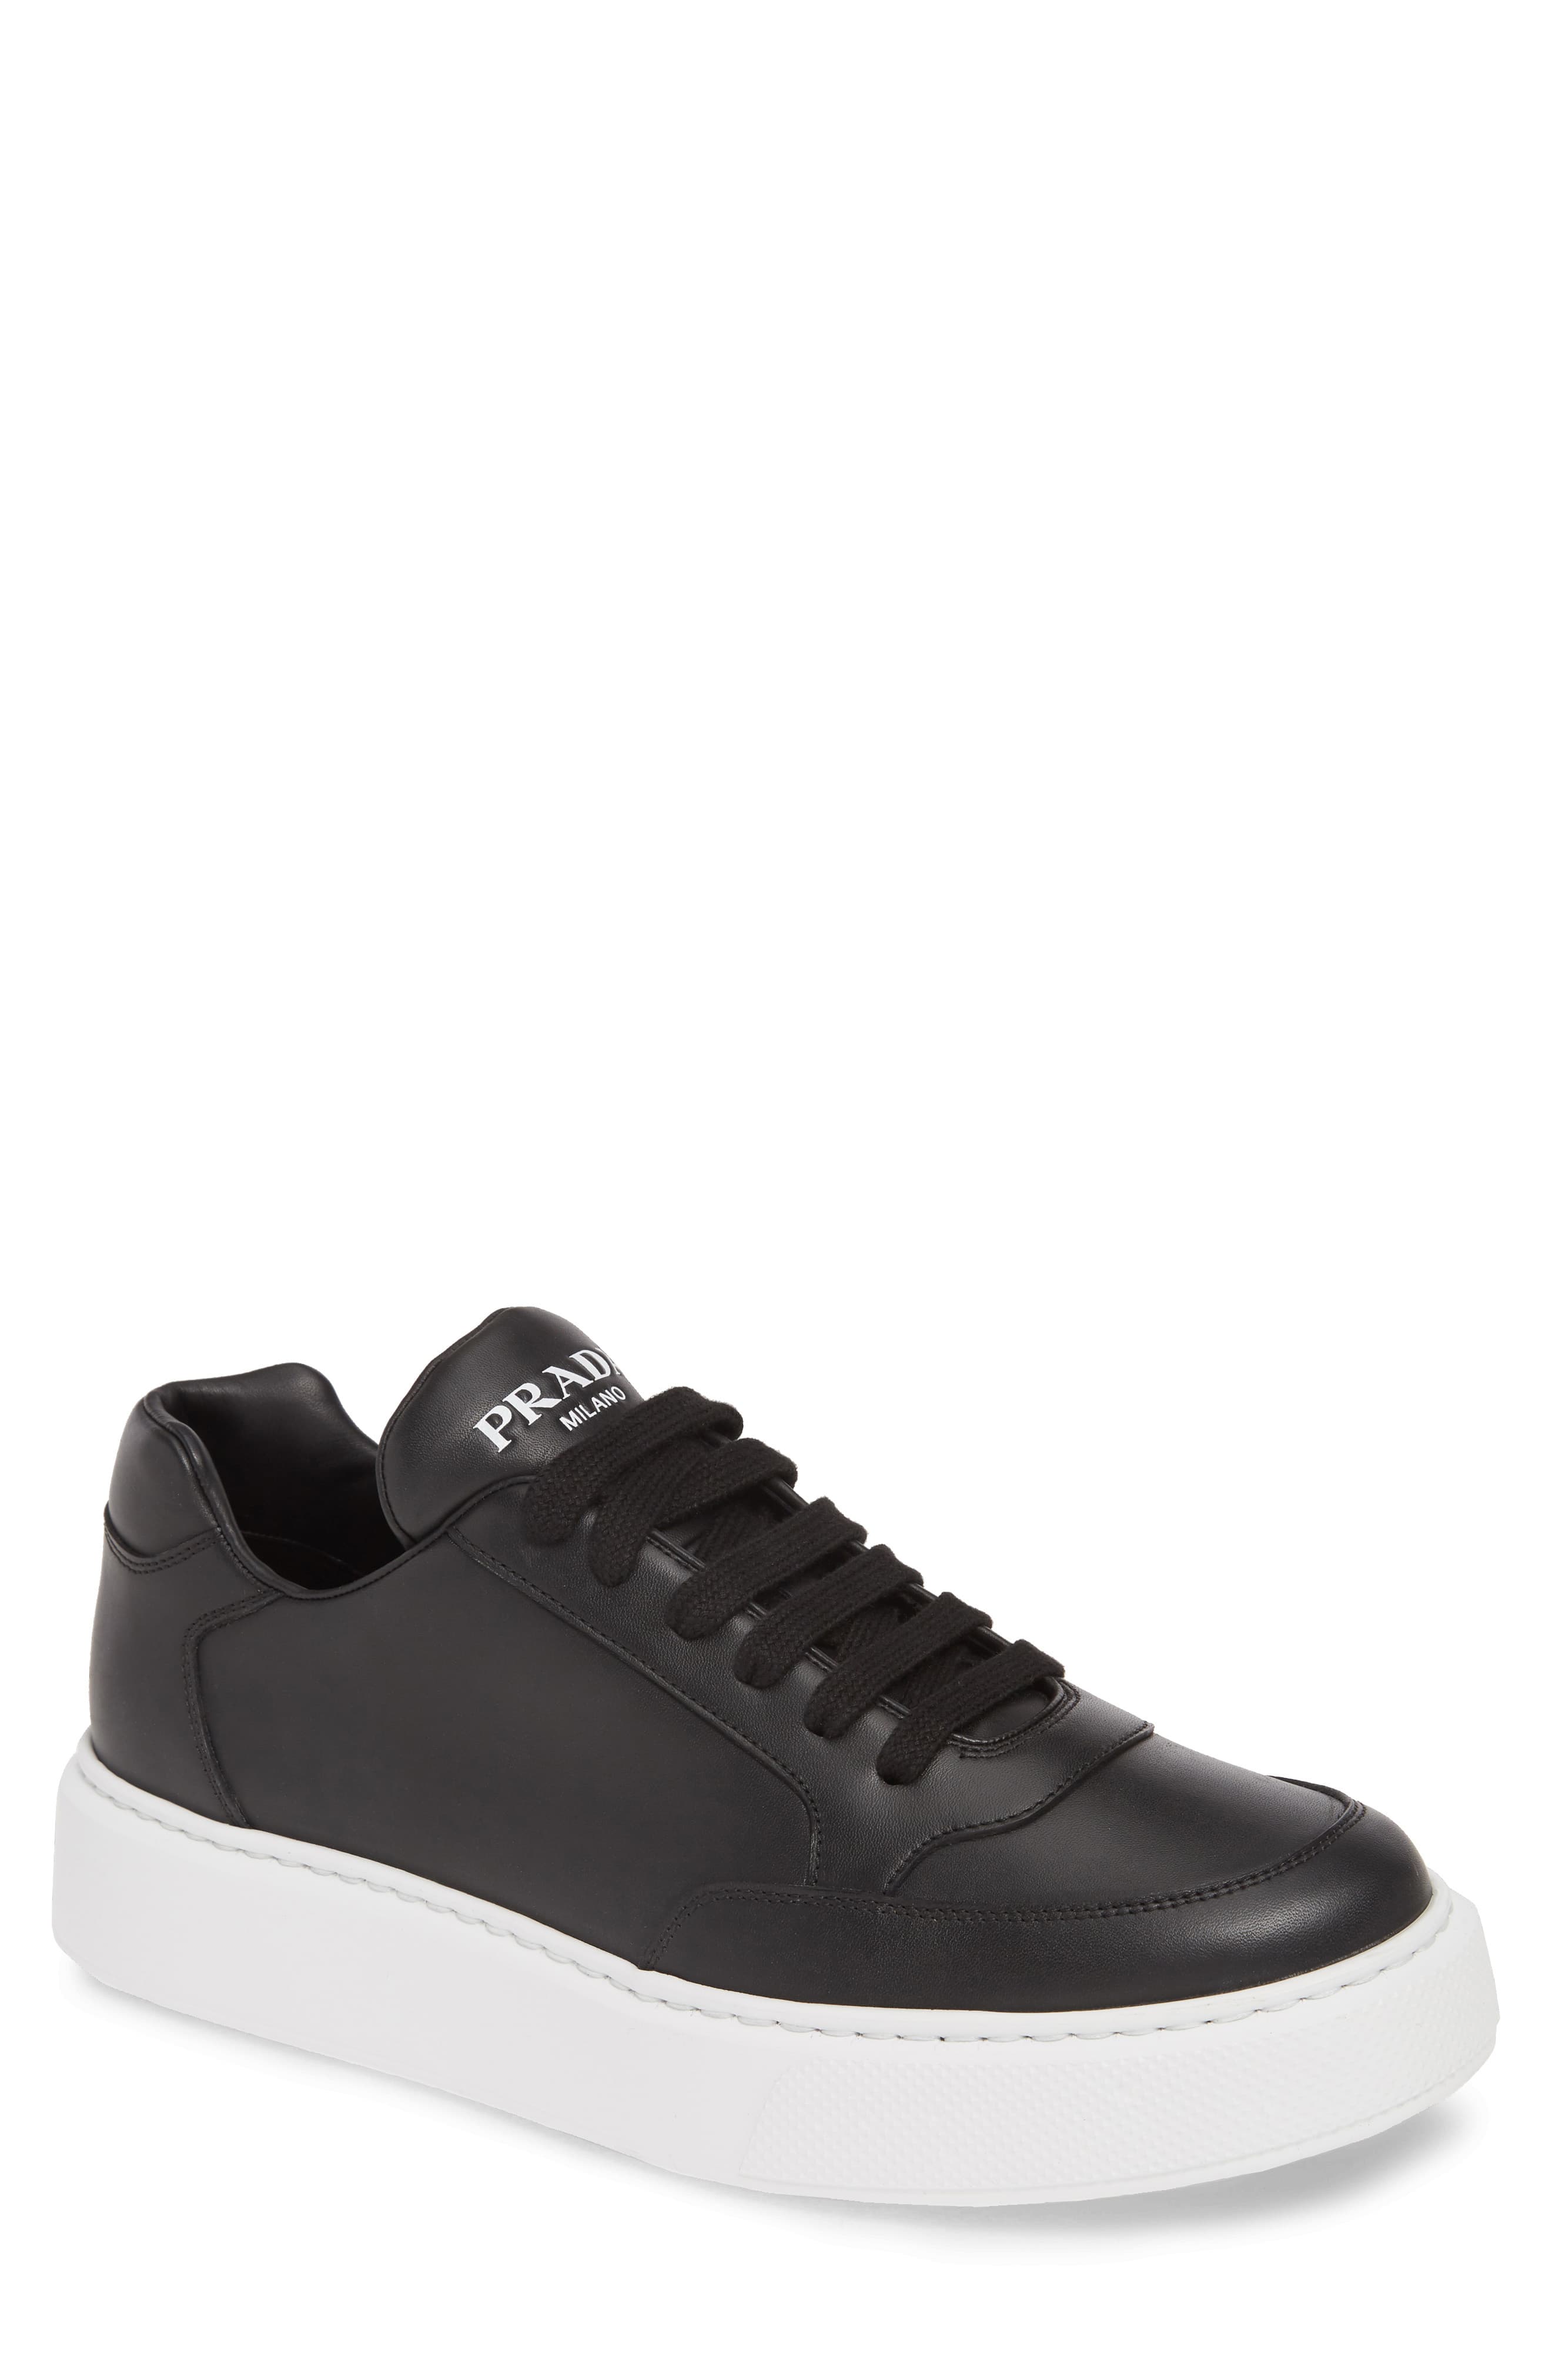 Men’s Prada Low Top Sneaker, Size 10US / 9UK – Black | The Fashionisto